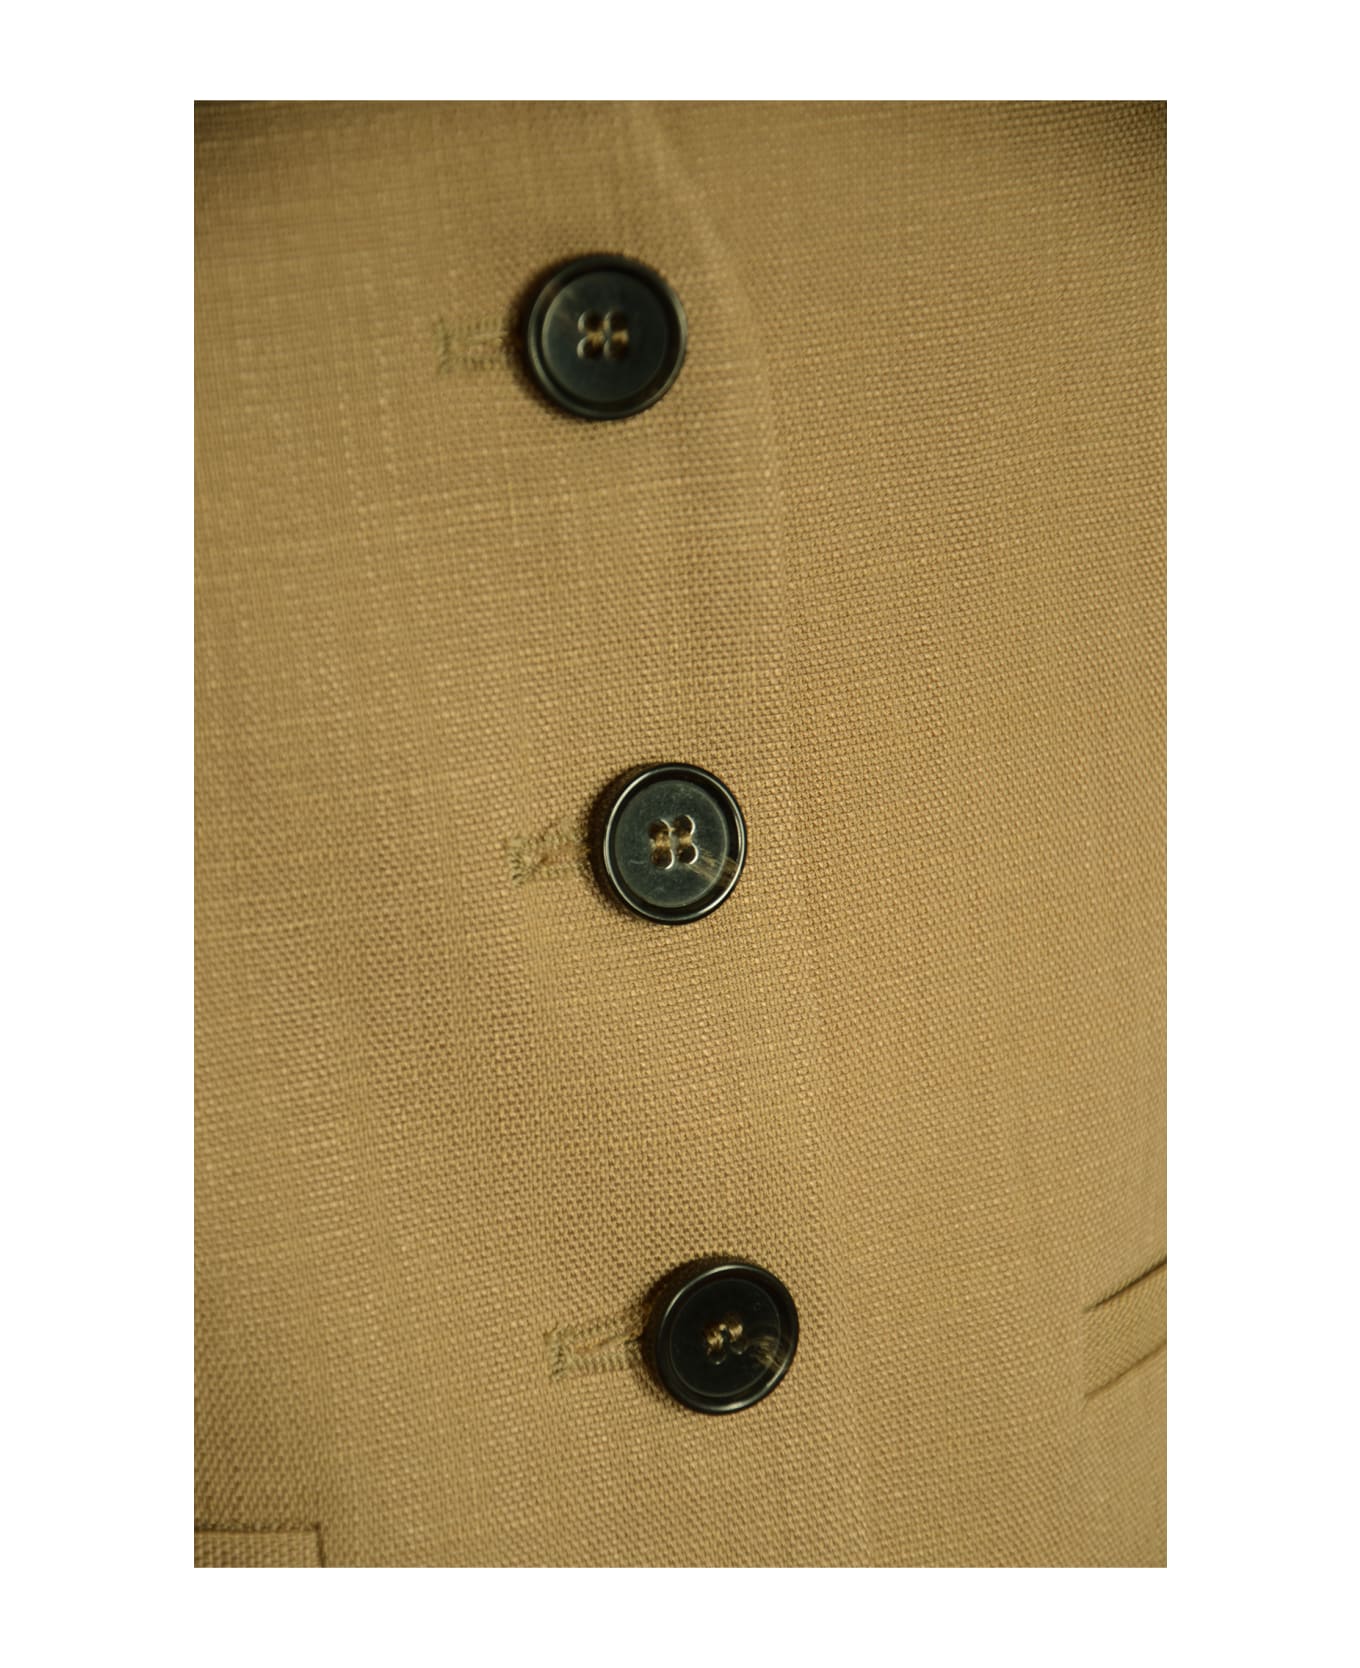 MSGM V-neck Buttoned Vest - BEIGE ベスト